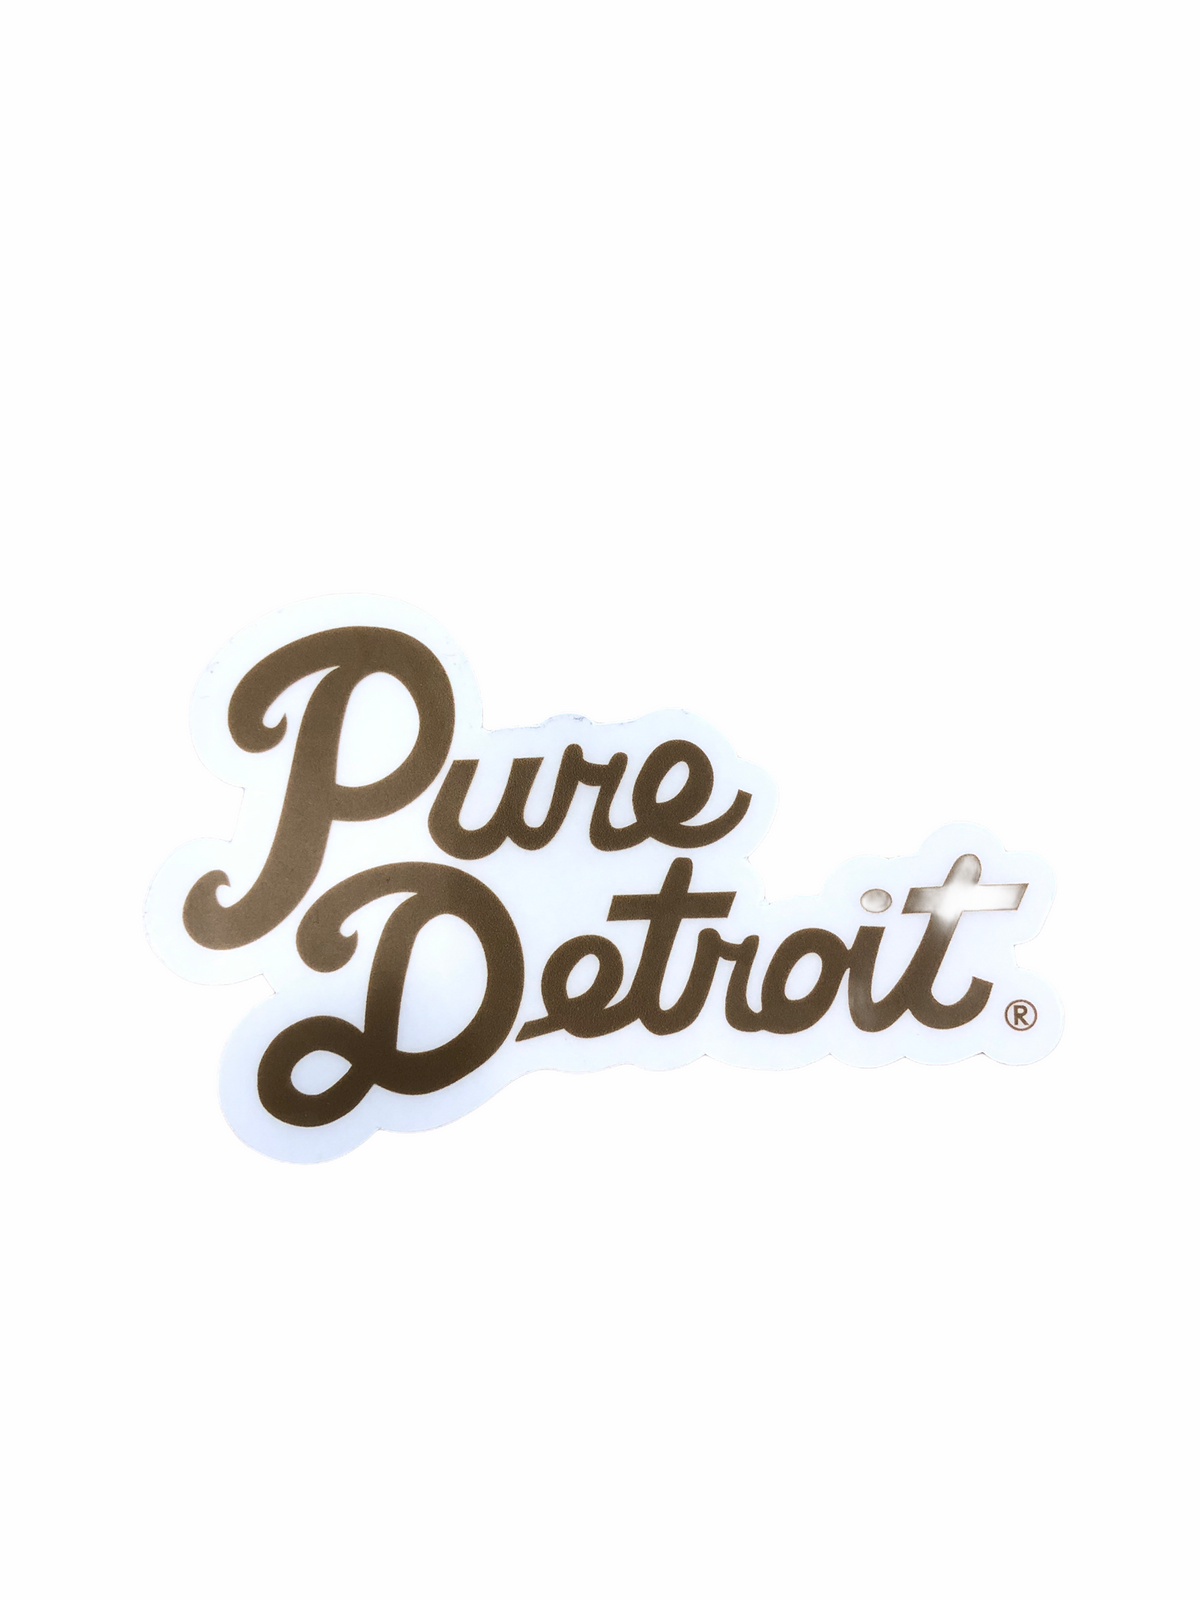 Pure Detroit Script Decal Decal   